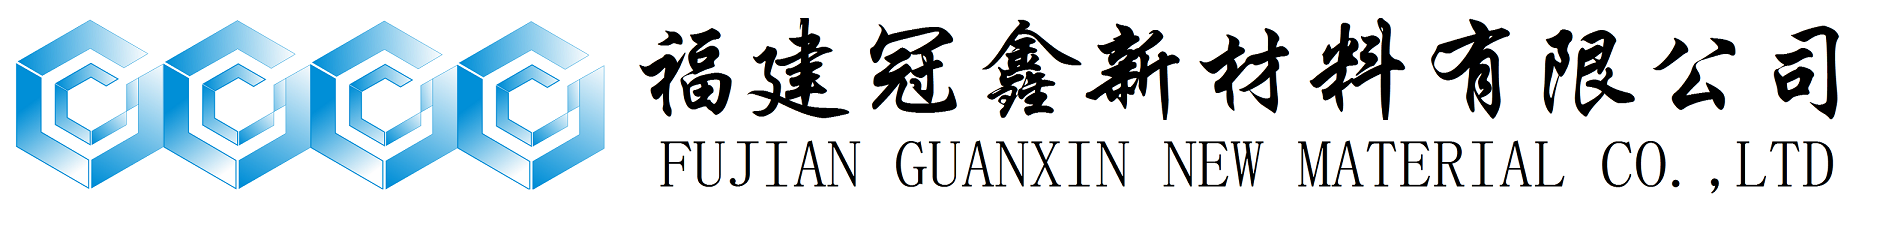 Fujian Guanxin New Material Co., Ltd. is a manufacturer of active zinc oxide, basic zinc carbonate and super transparent zinc carbonate!